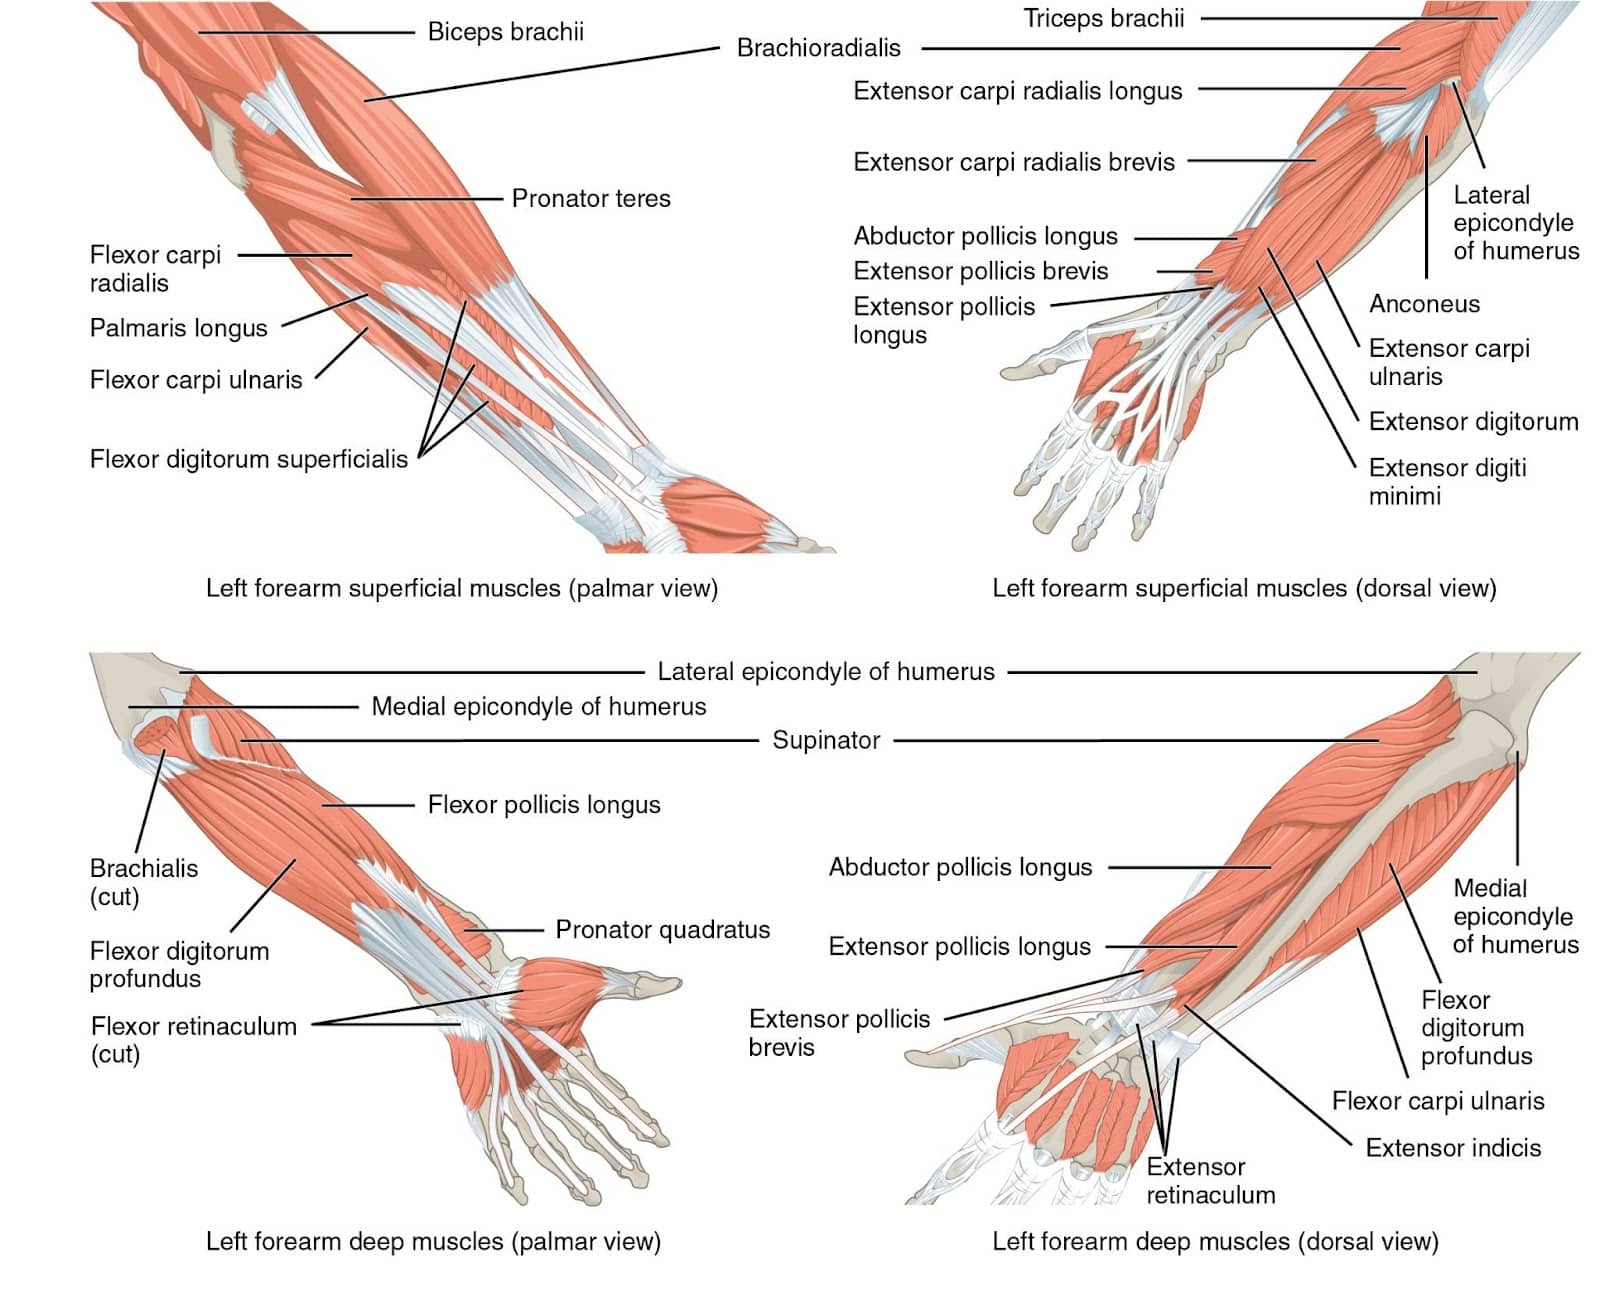 Forearm muscle anatomy